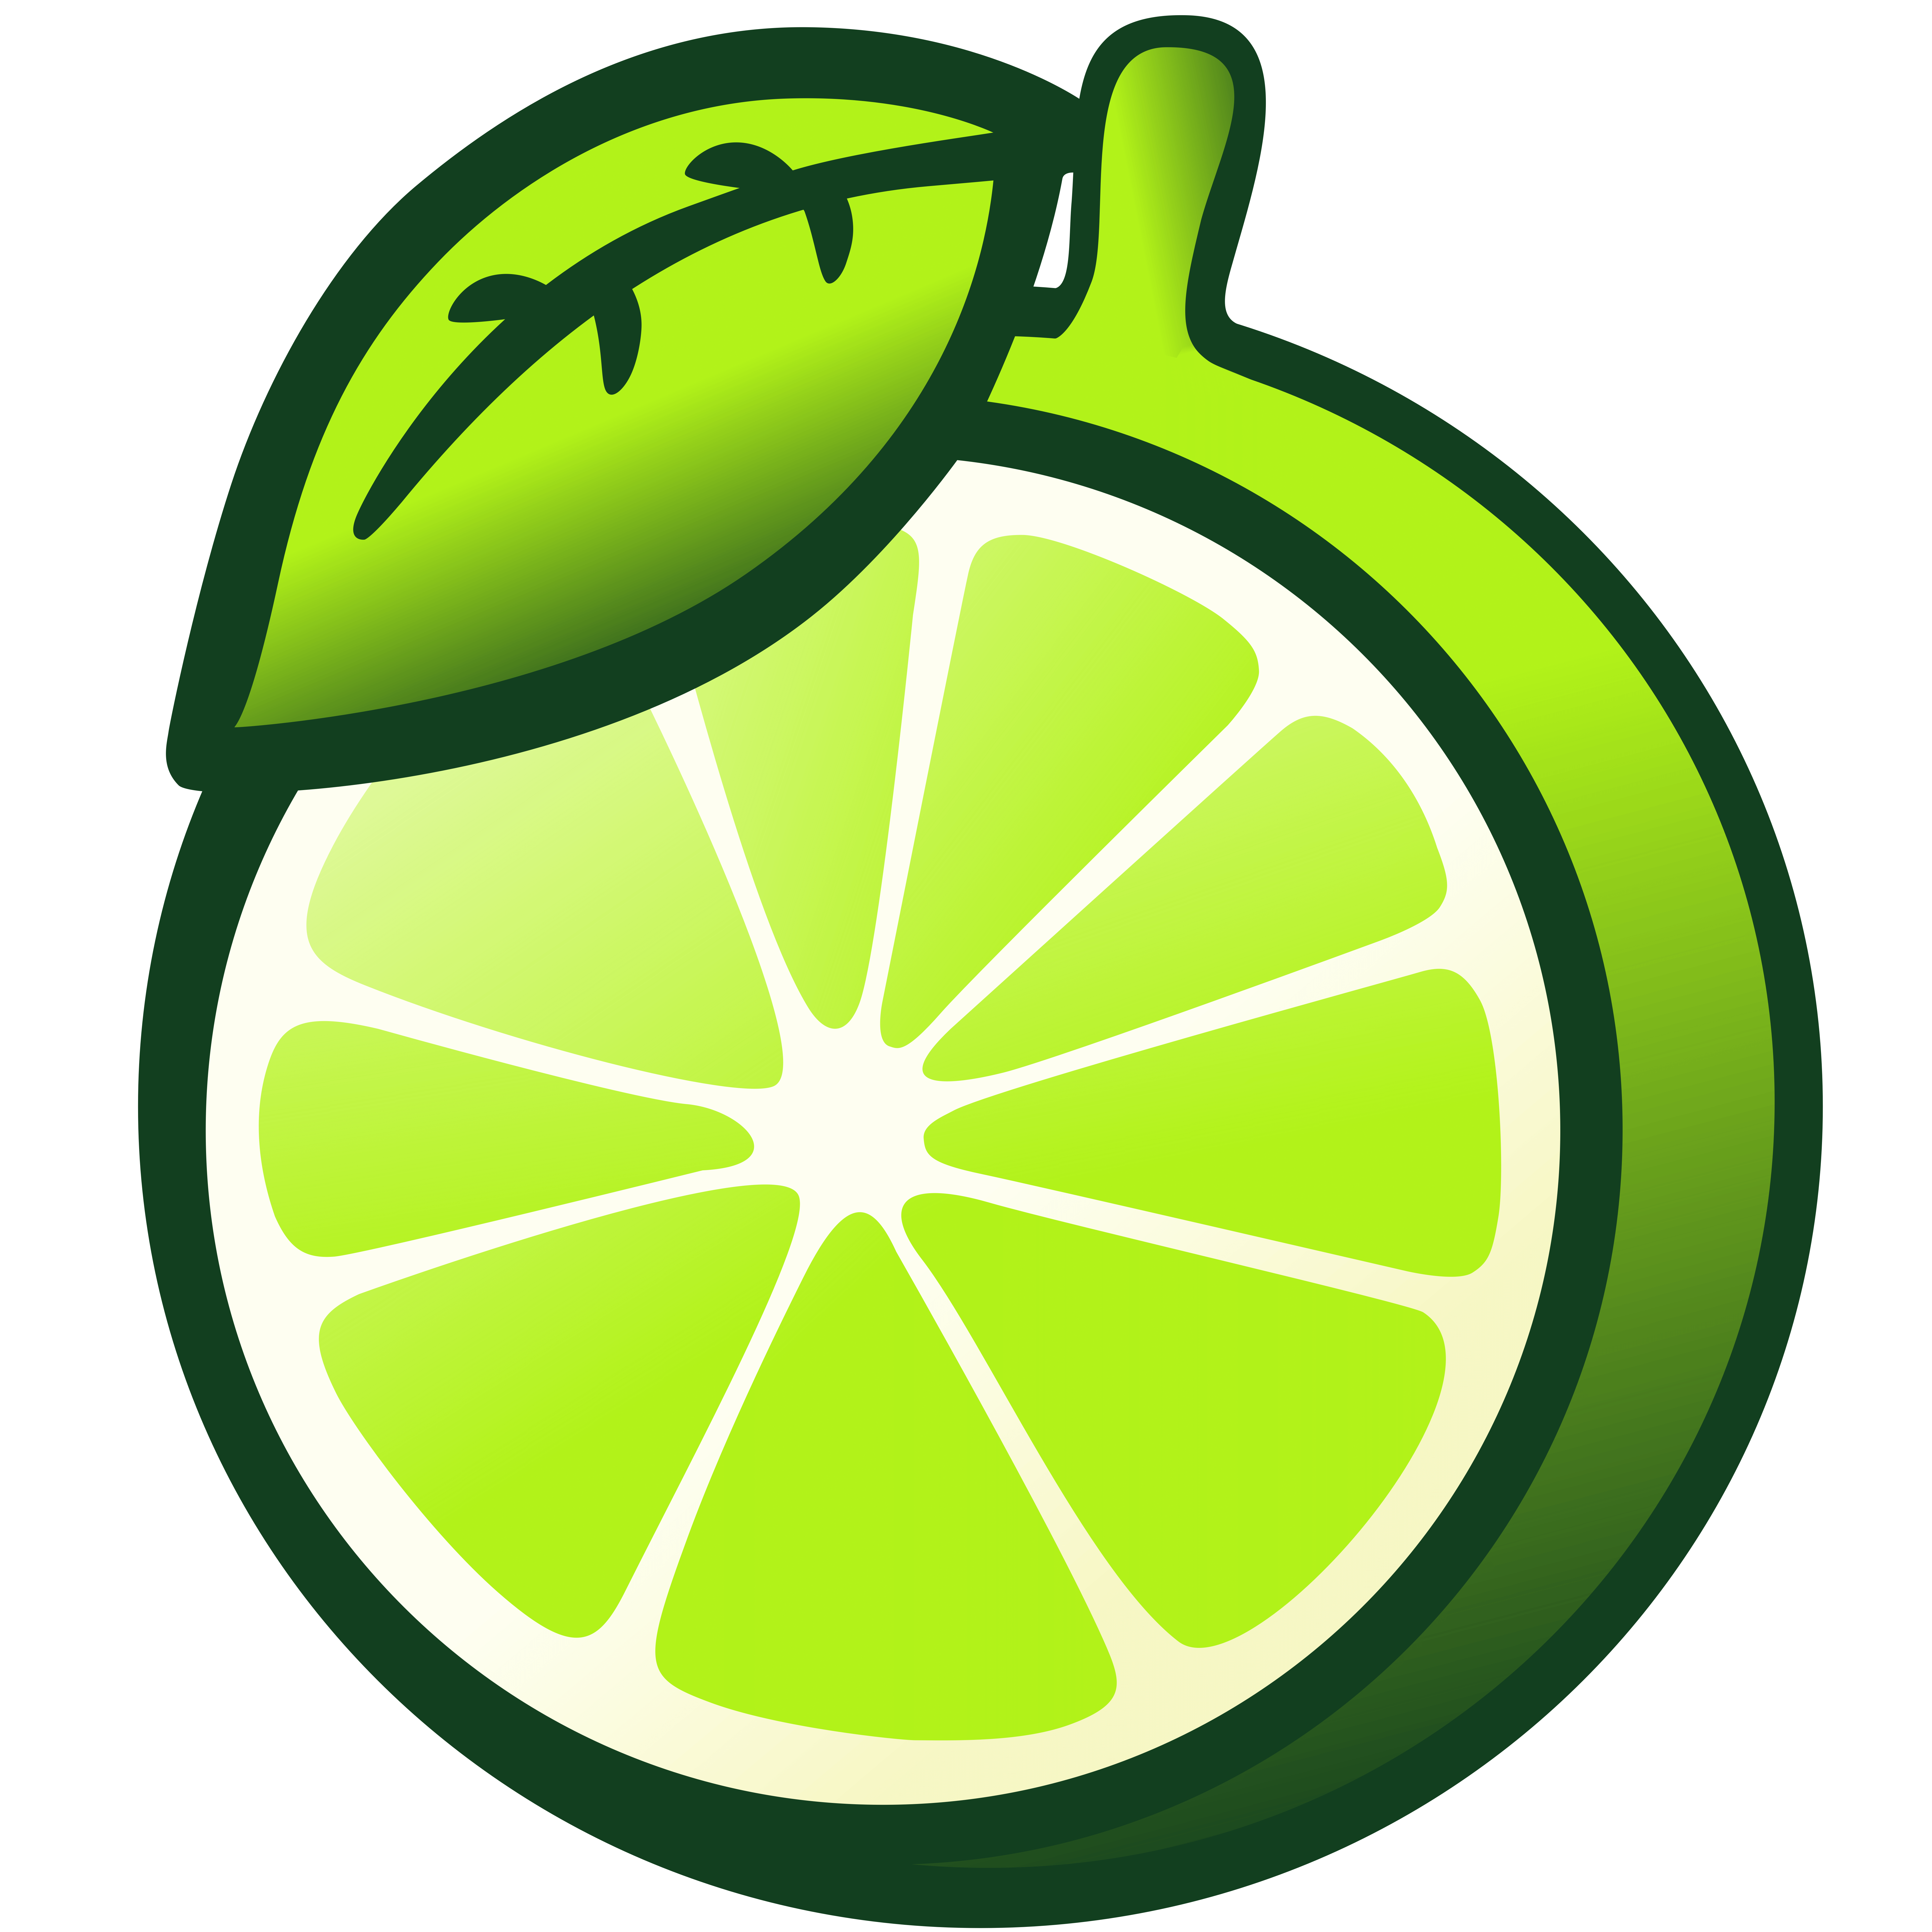 Lime3DS logo